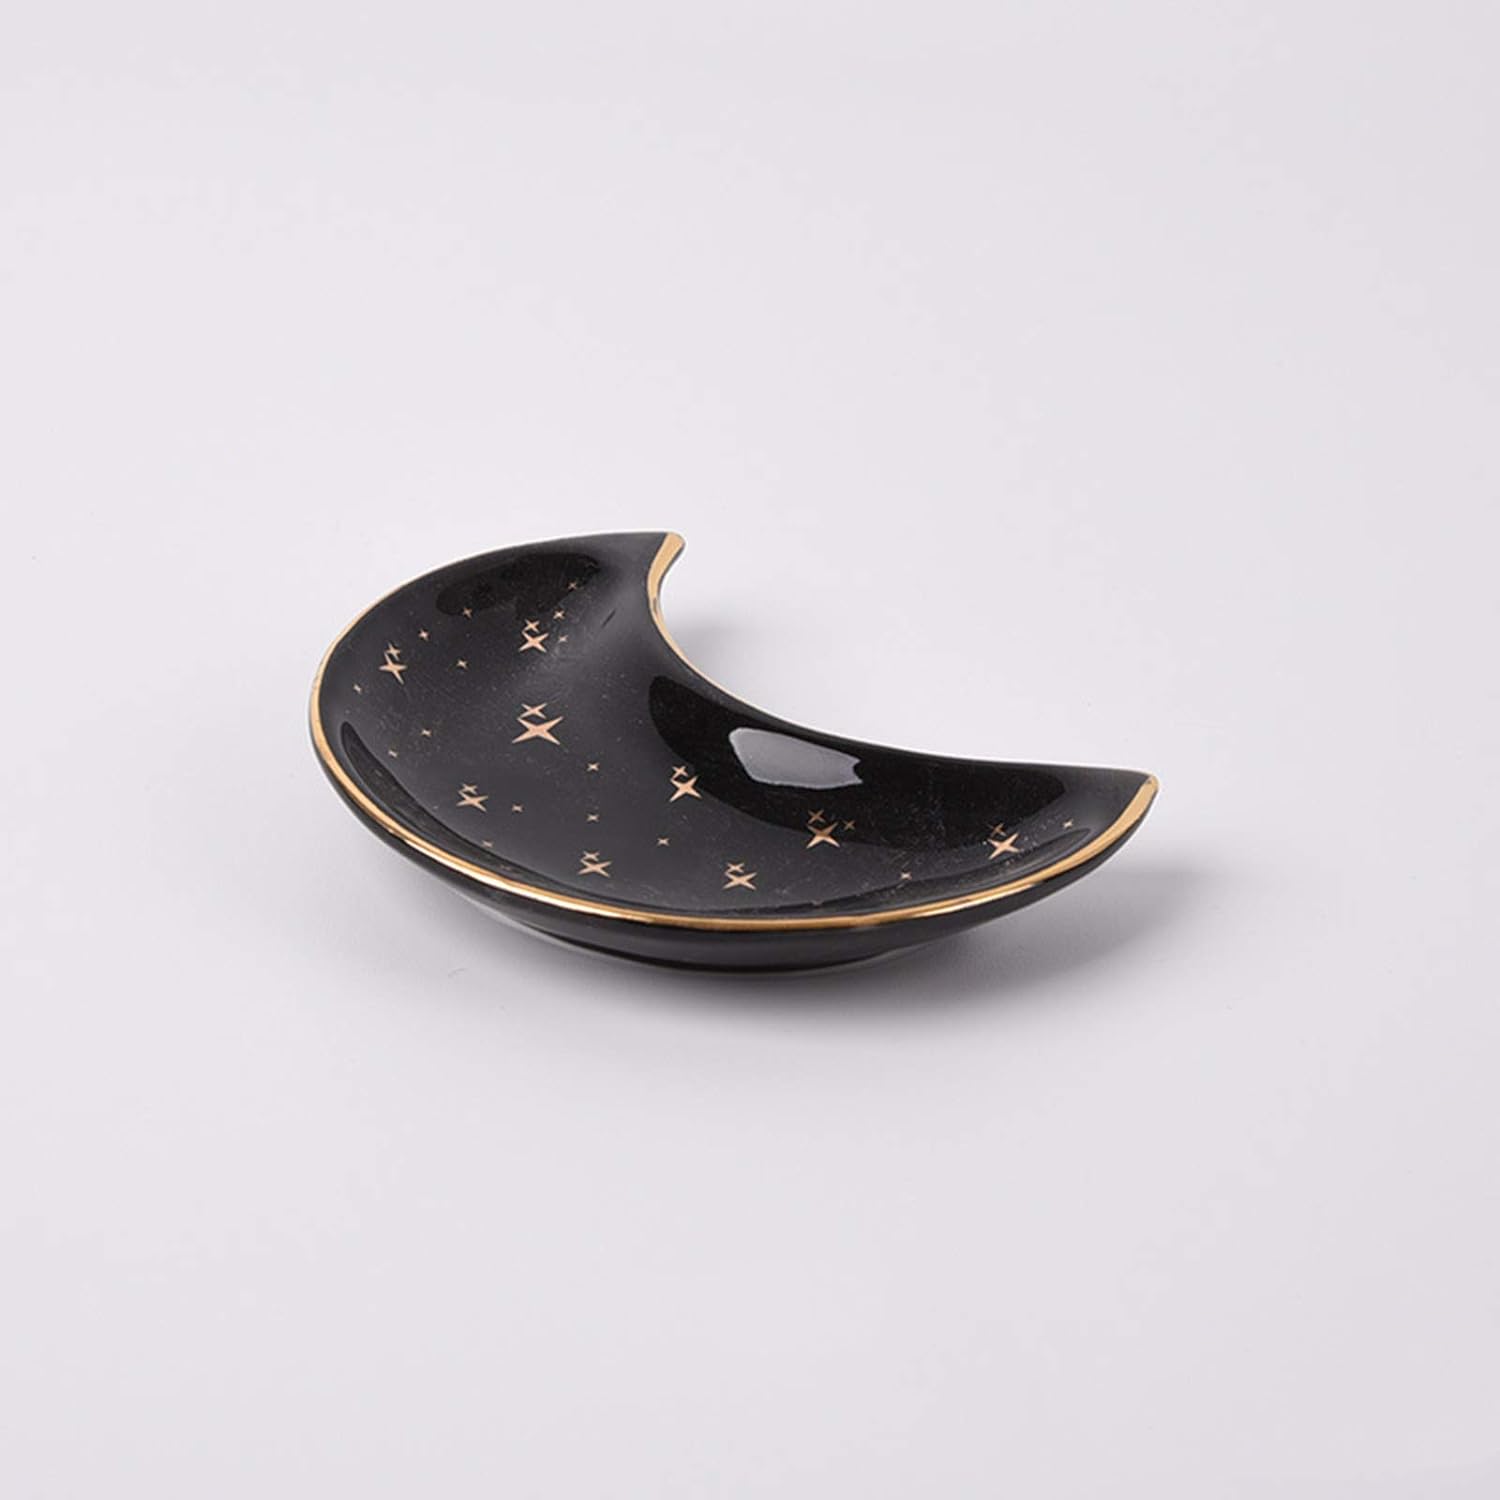 BIHOIB Small Moon Jewelry Dish Tray, Decorative Ceramic Trinket Dish, Modern Accent Tray for Vanity, Blue